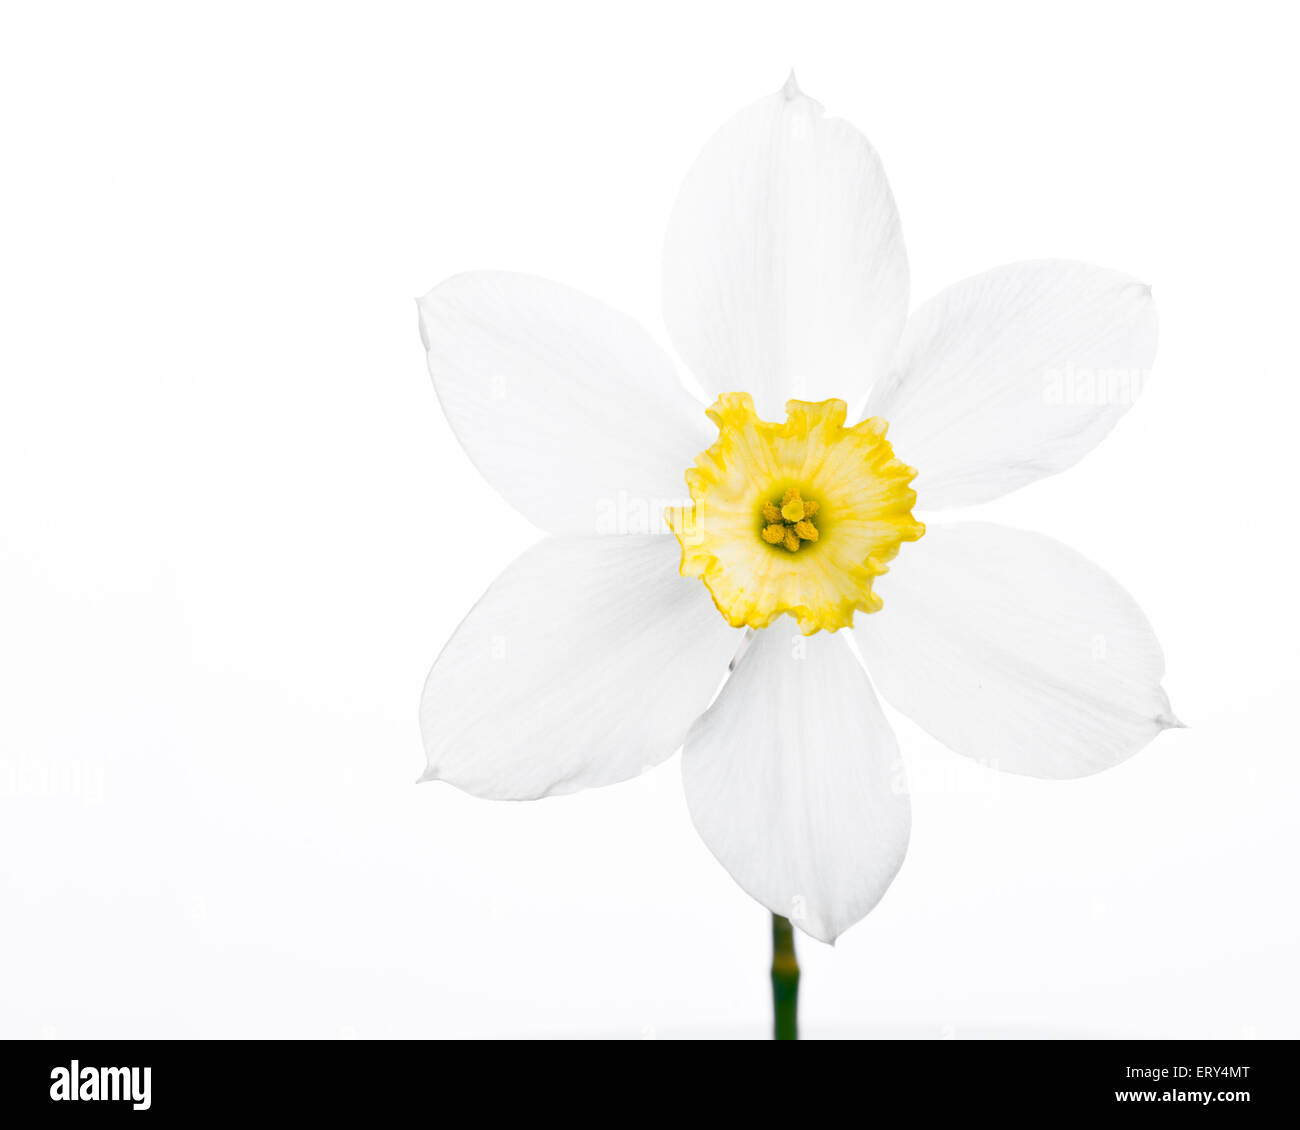 Narciso blanco narciso jonquil plantas florales Foto de stock